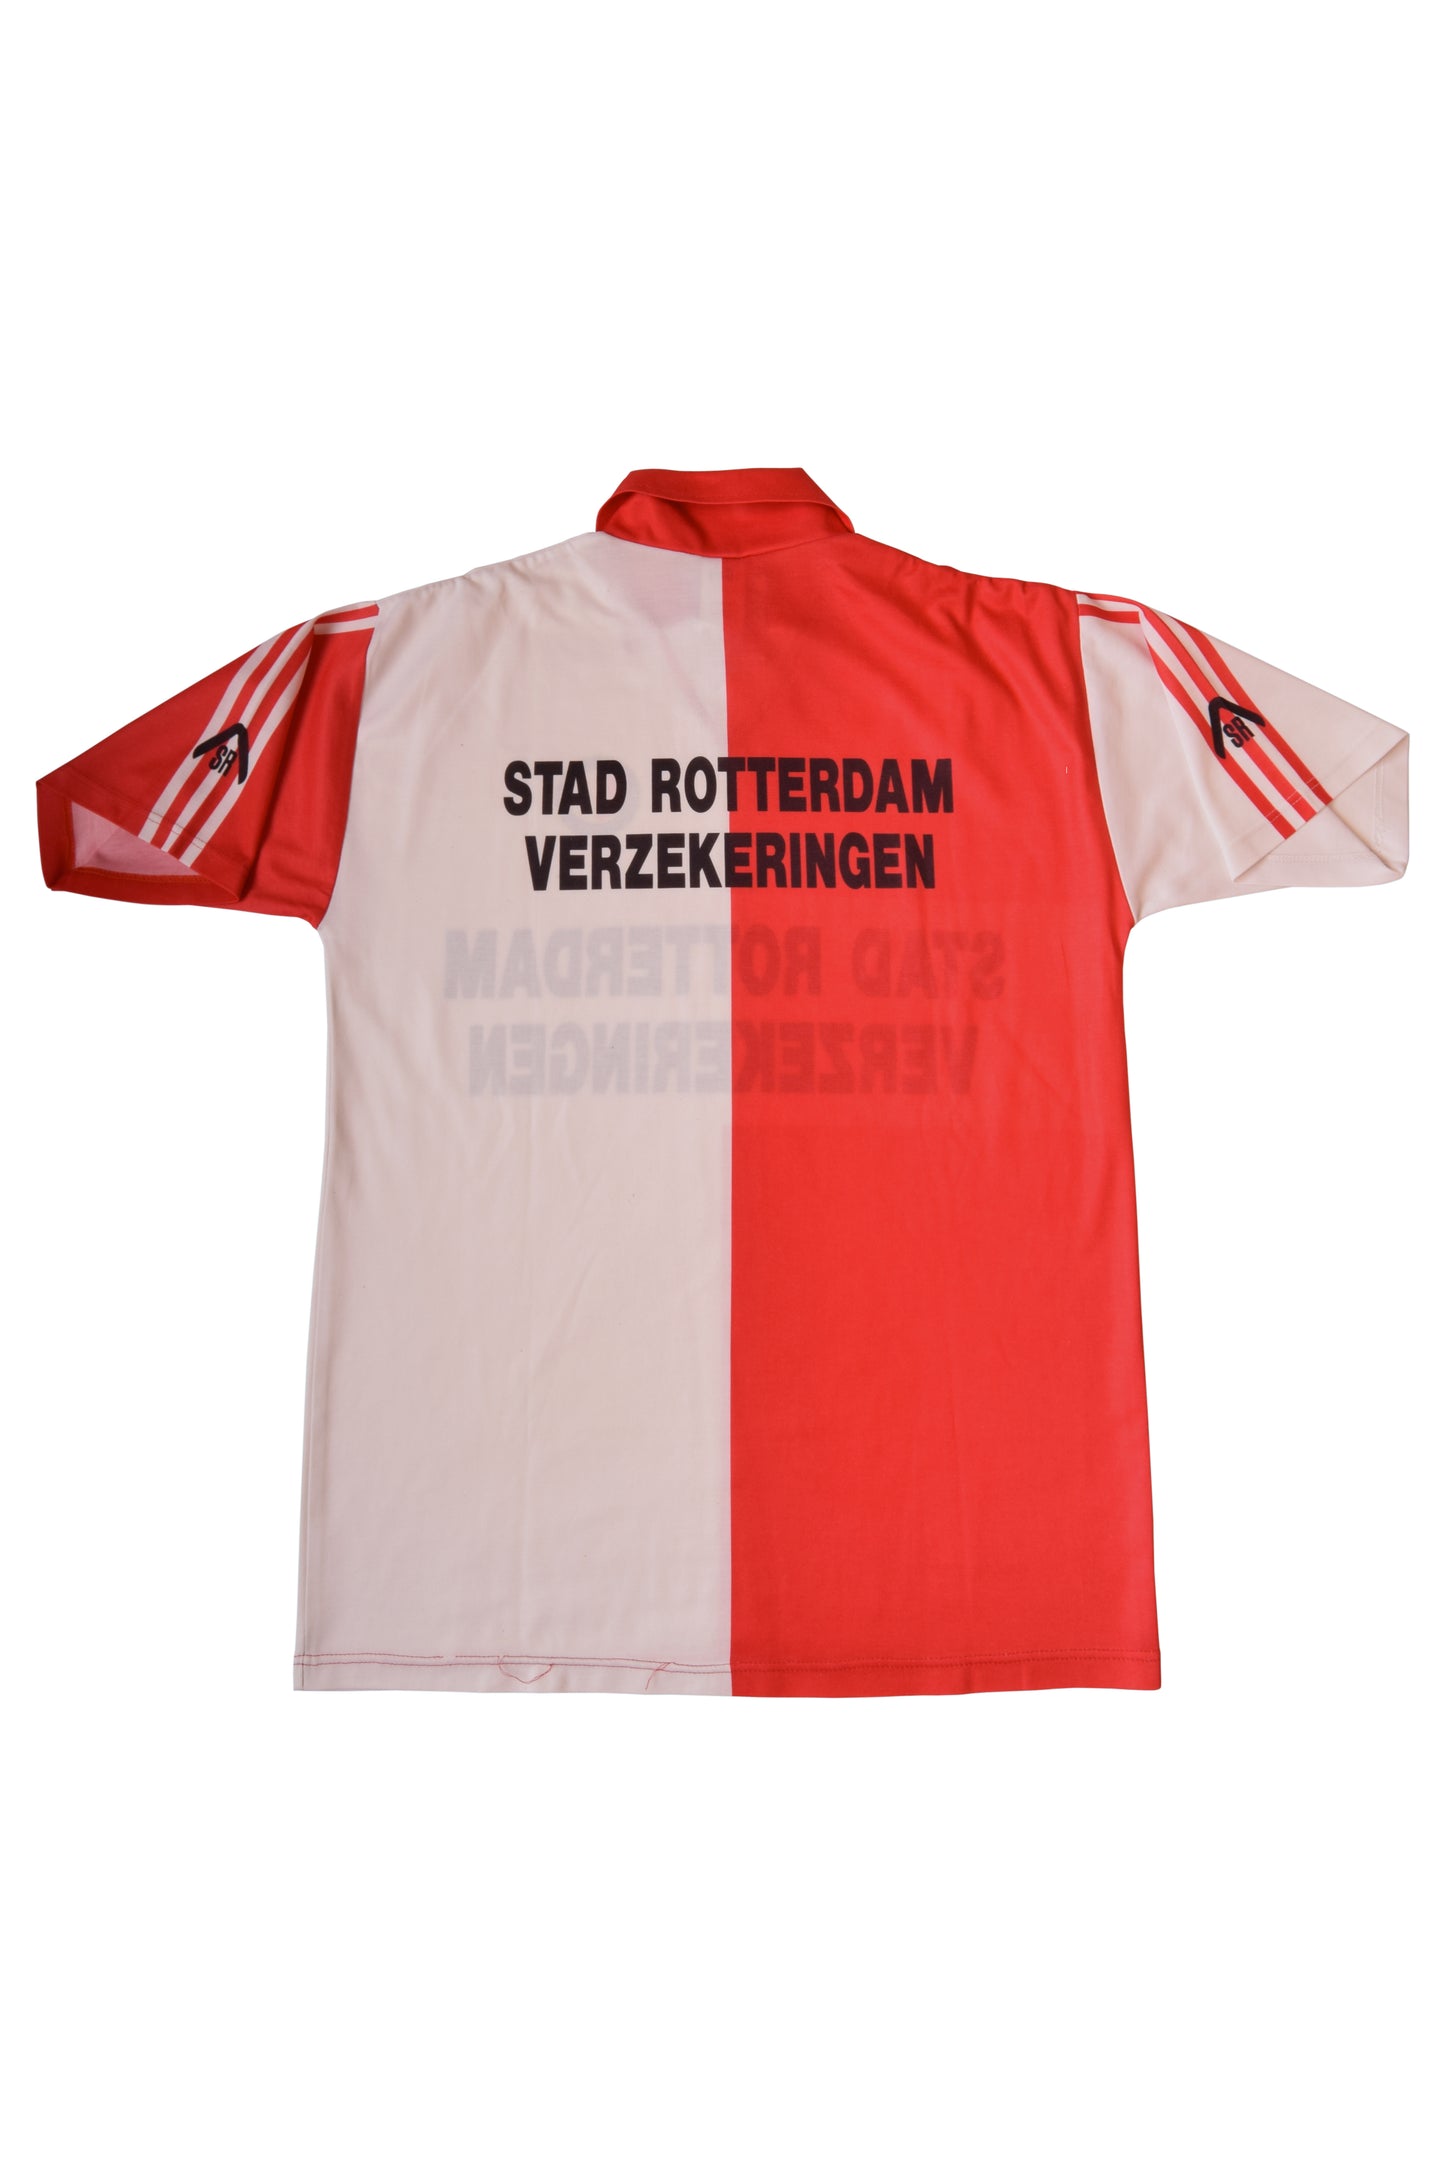 Vintage Adidas Football Shirt Feyenoord Roterdam 1992-1994 Made in Belgium Size M